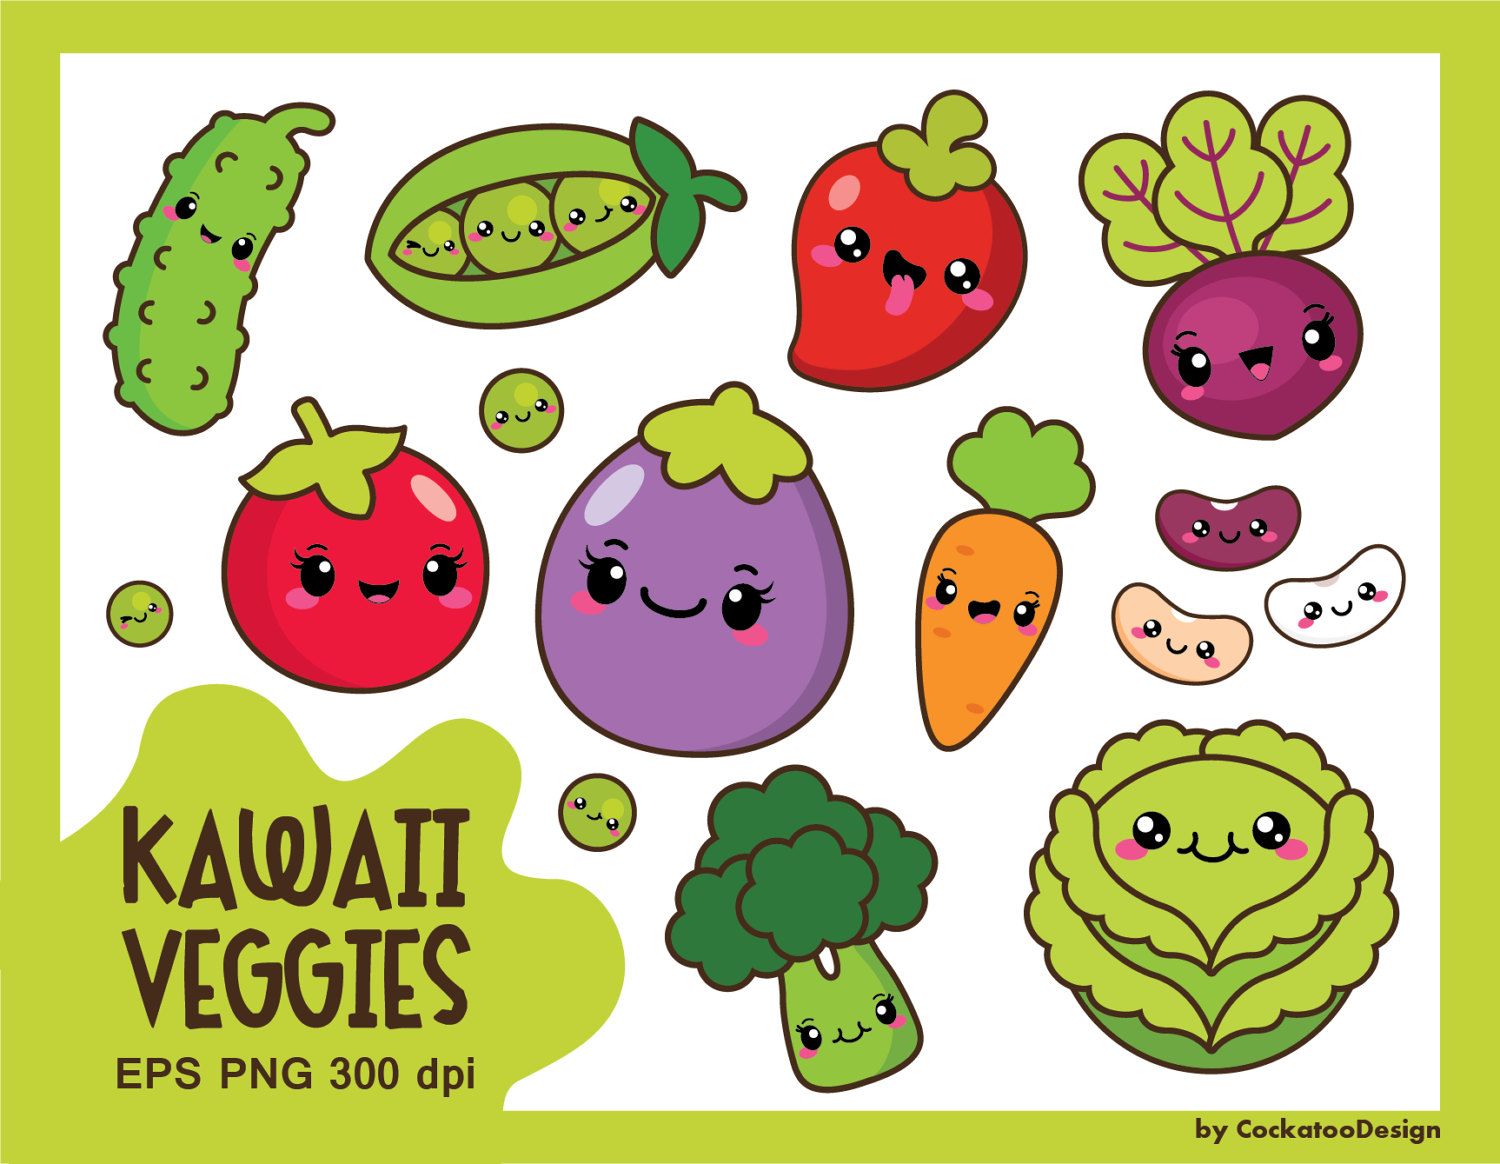 Kawaii vegetables clipart, kawaii veggies clipart, healthy